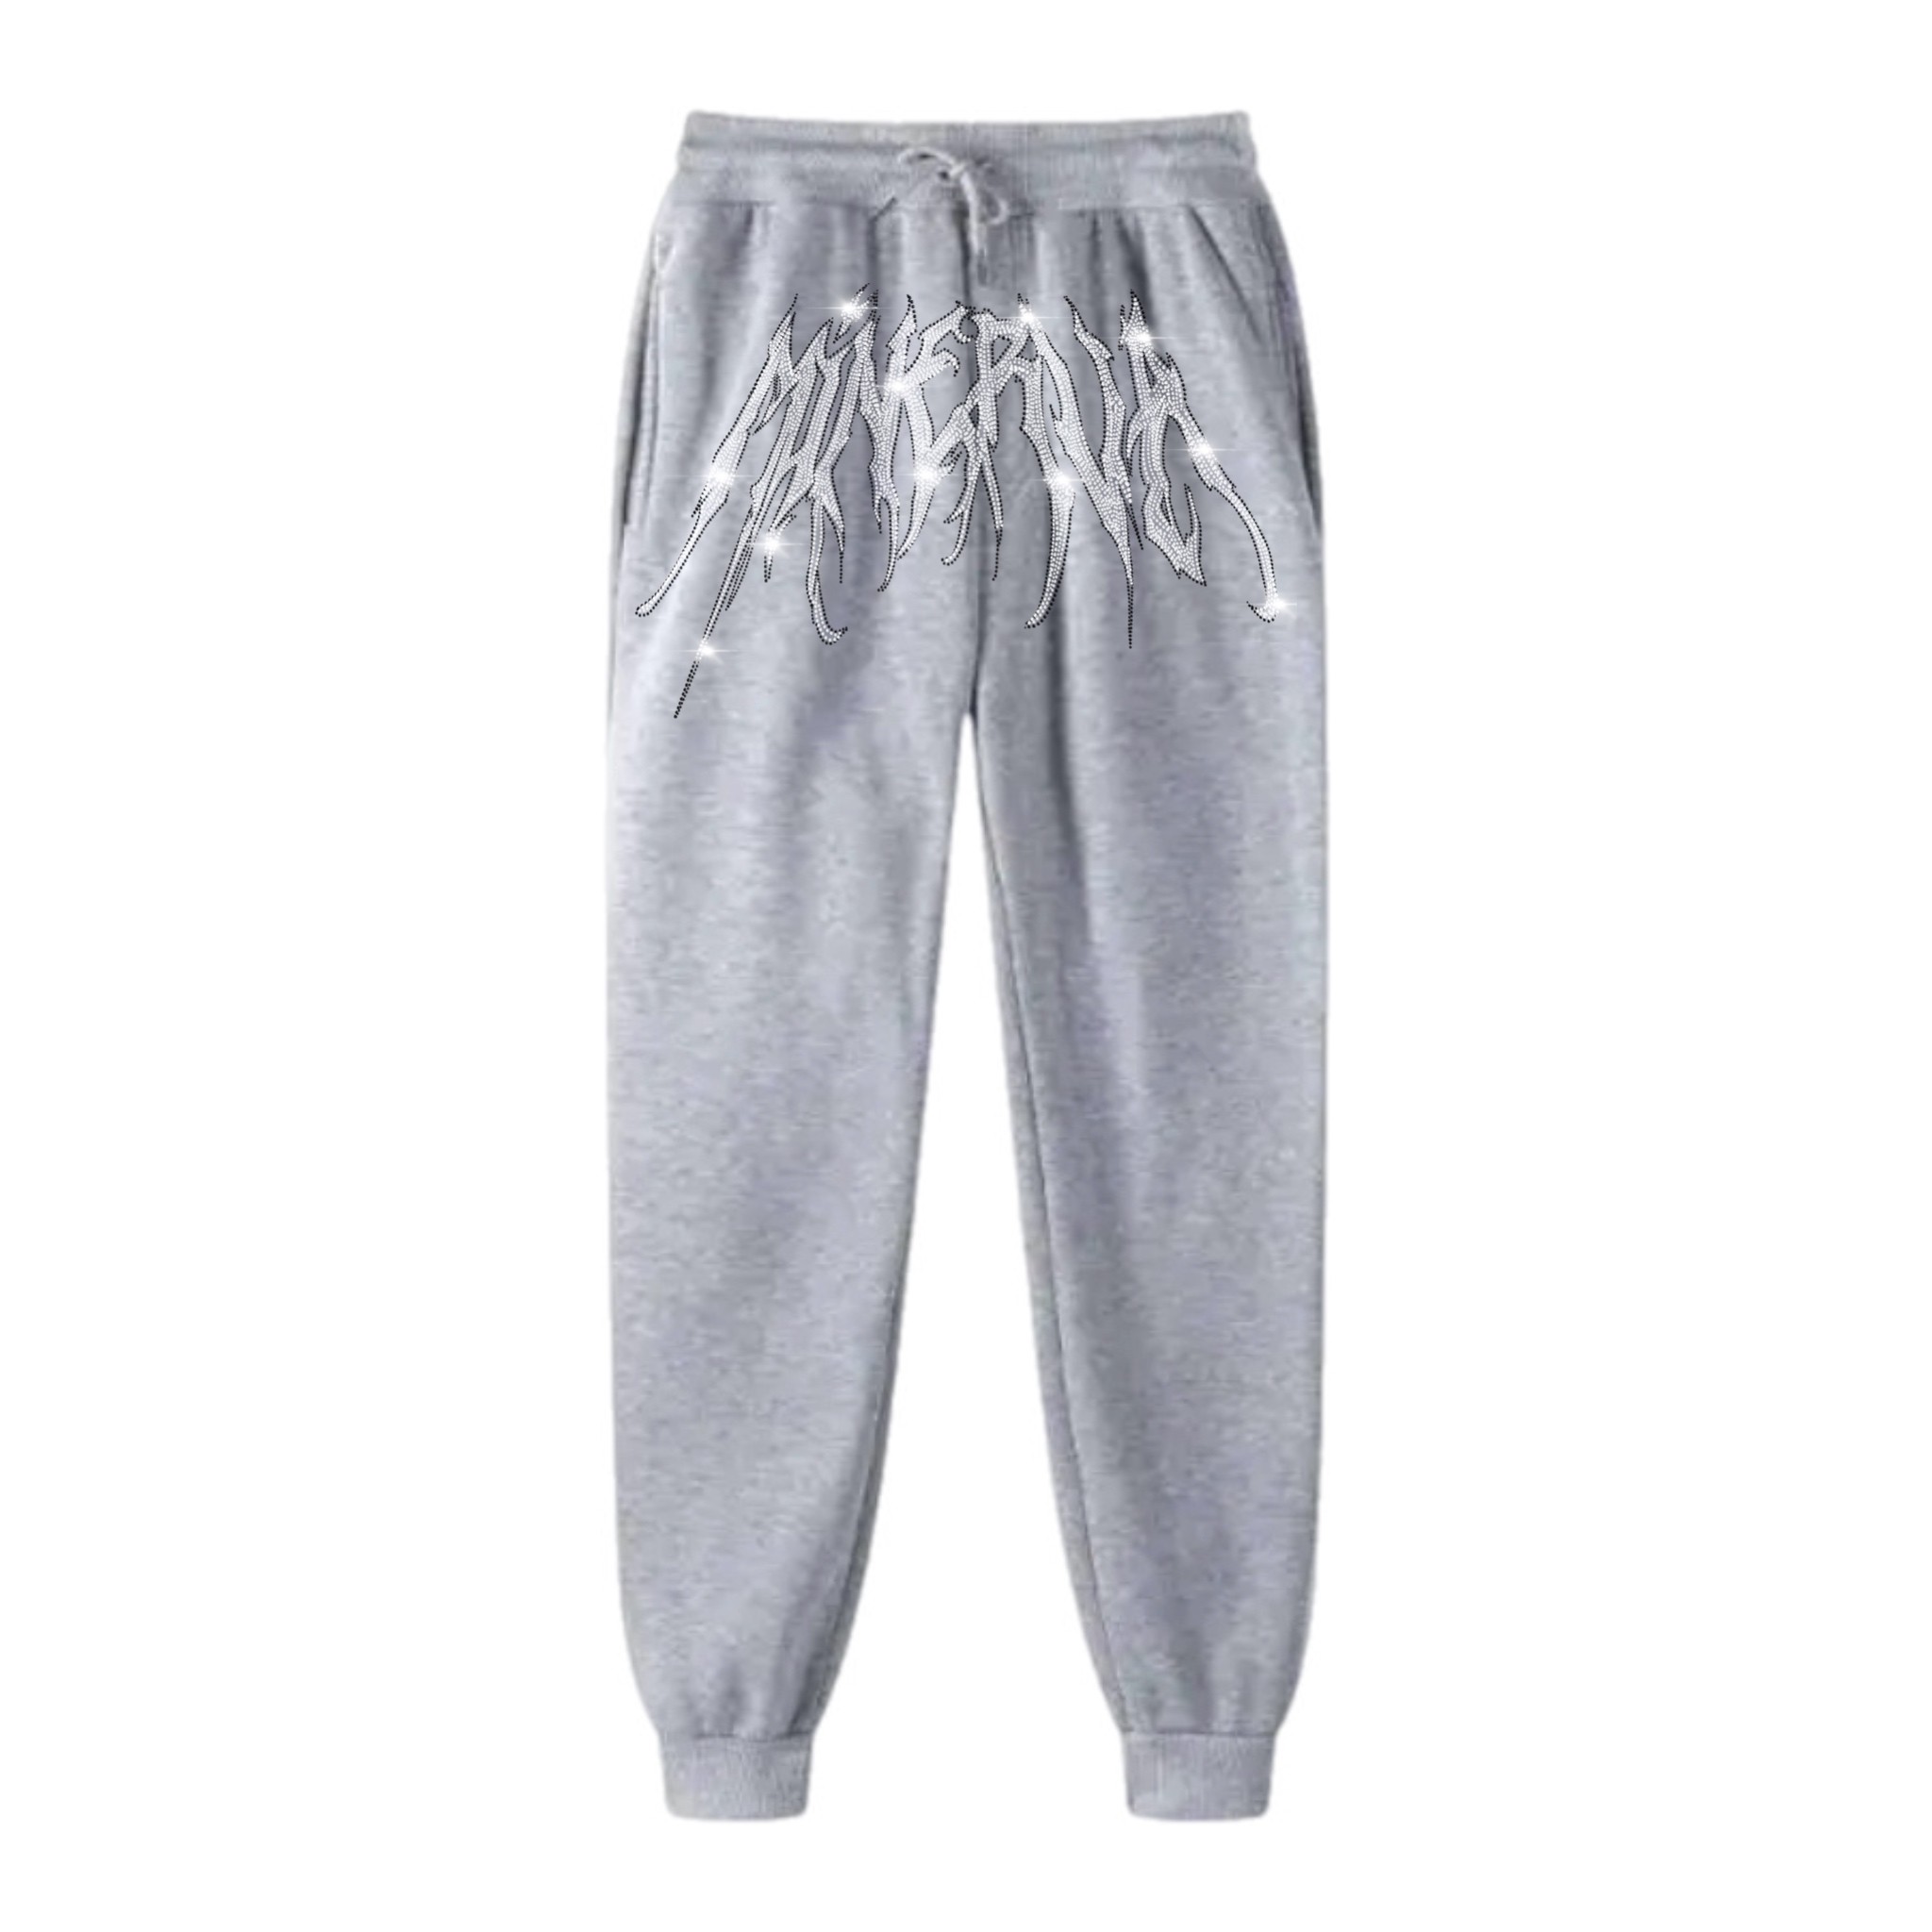 MINERVA rhinestone printed grey sweatpants